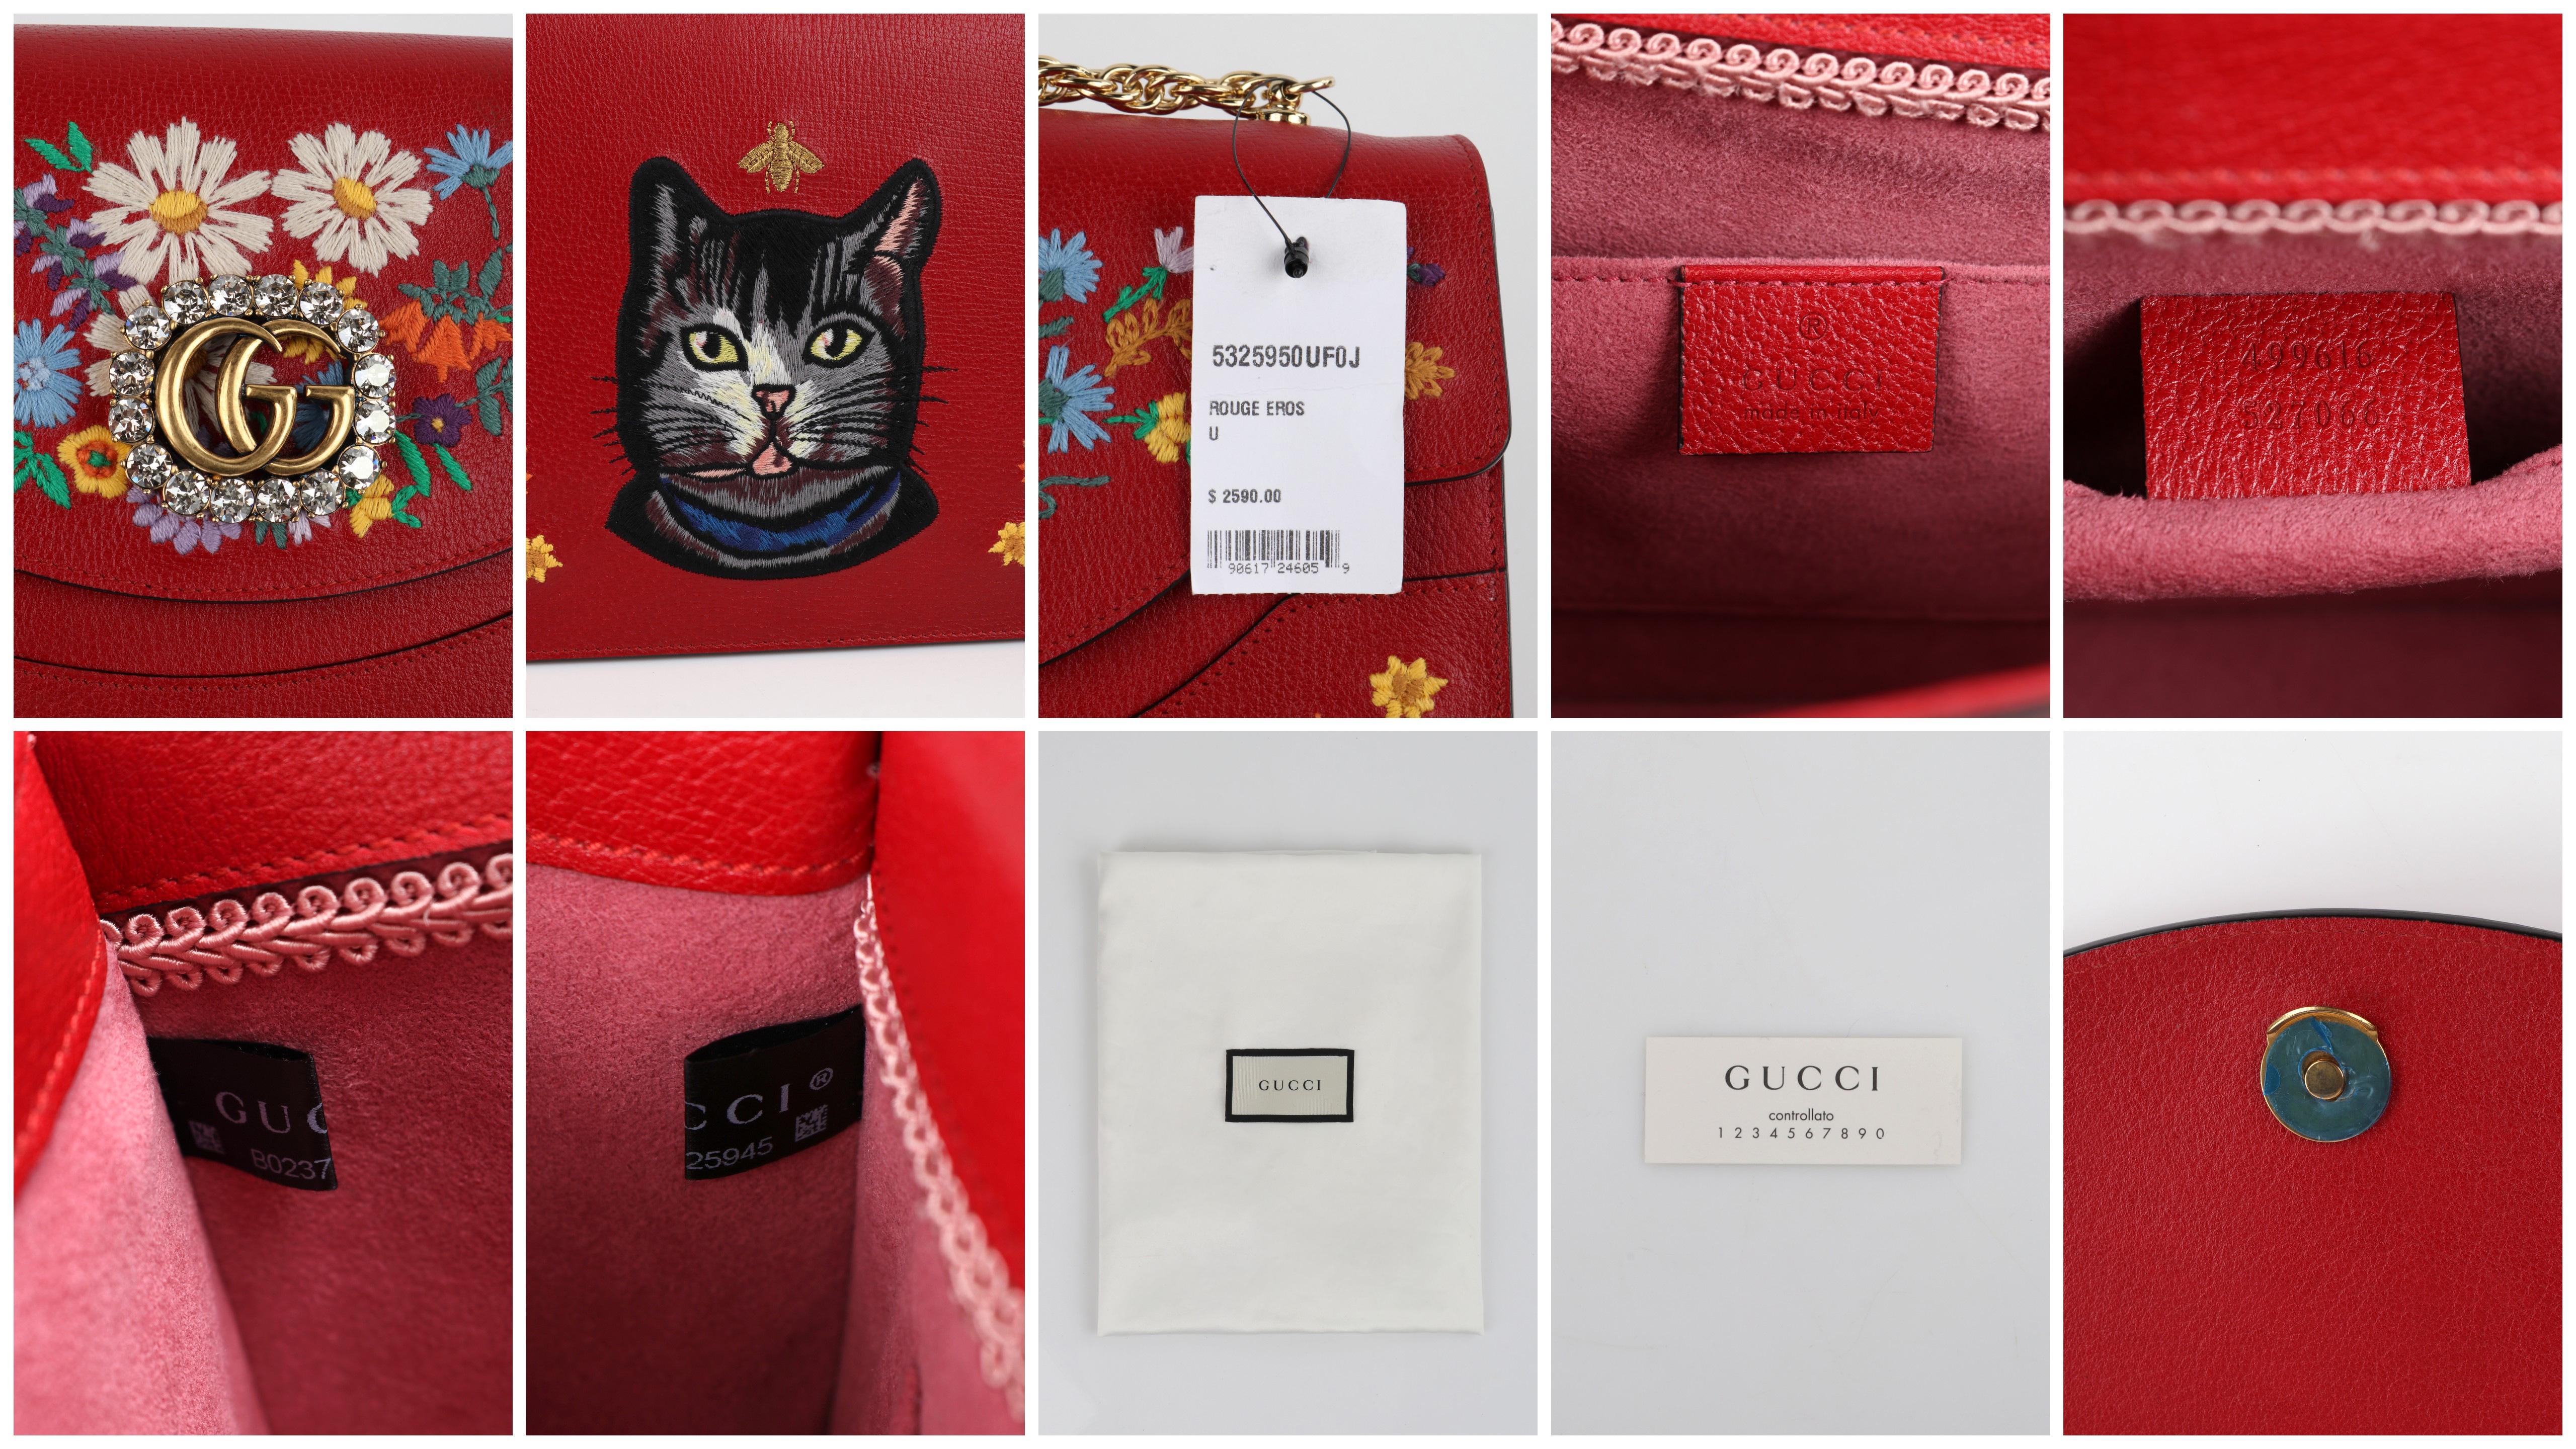 GUCCI Cruise 2018 “Linea Ricami” Red Floral Cat Crystal GG Large Shoulder Bag 3